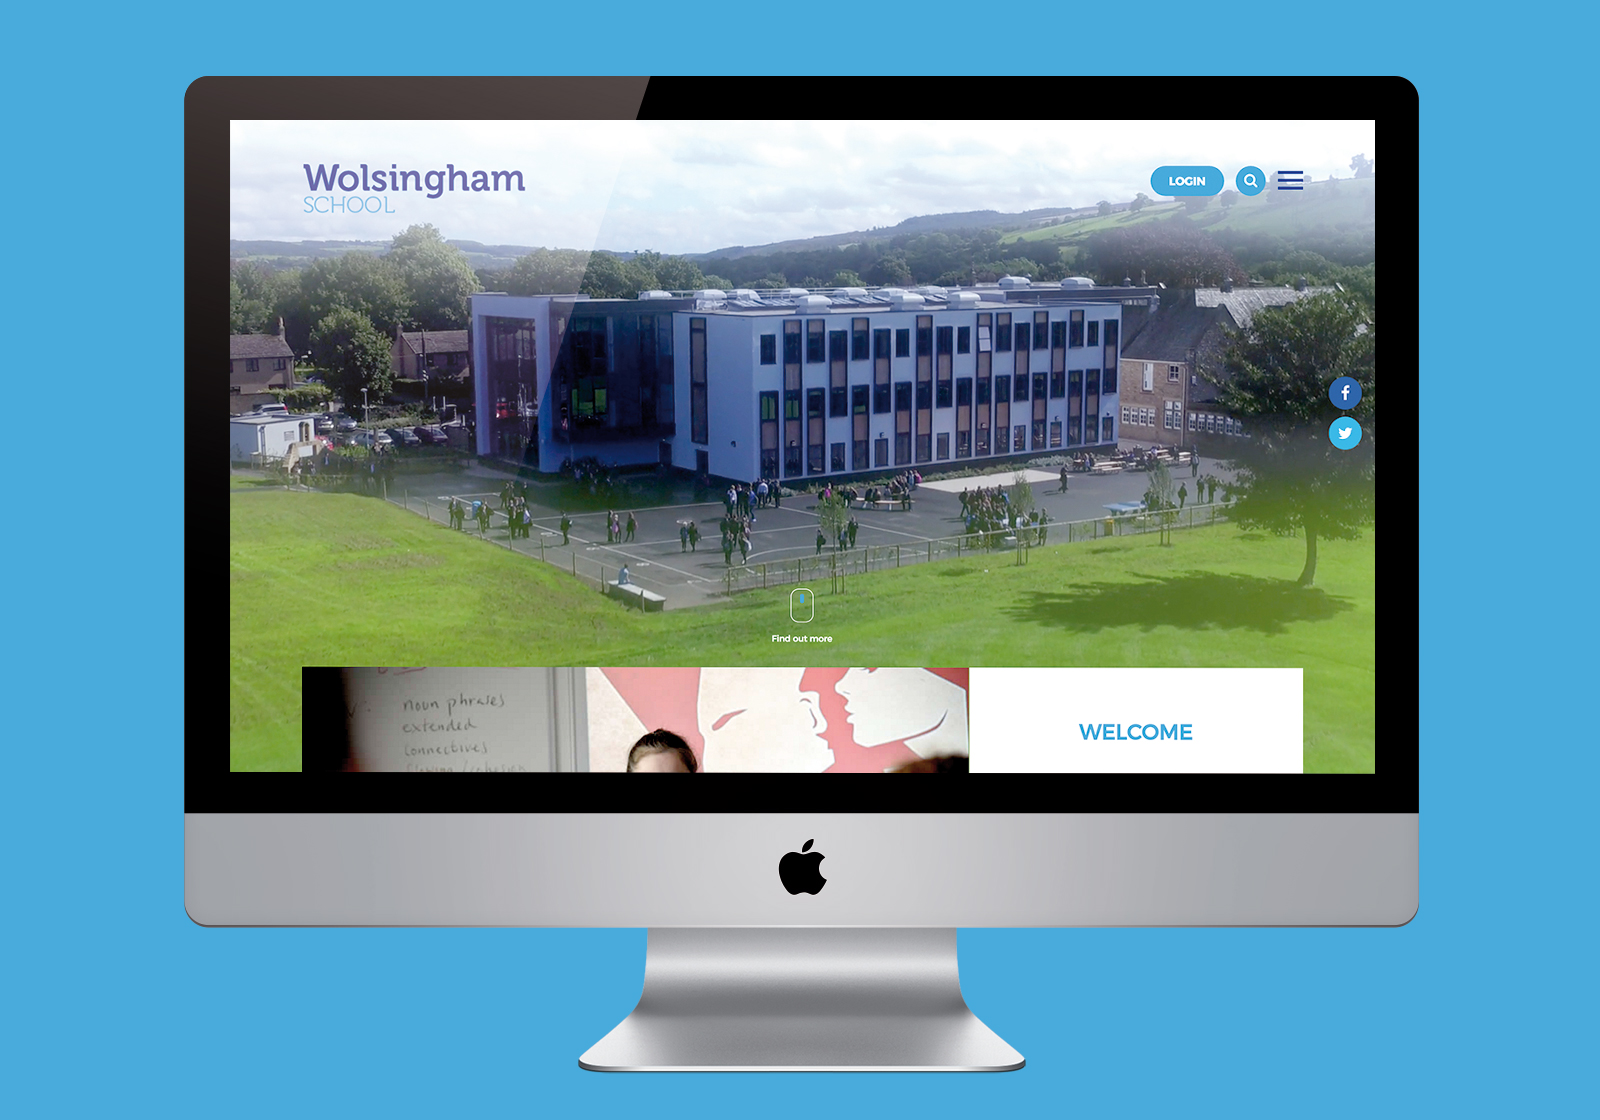 Video marketing package for Wolsingham School